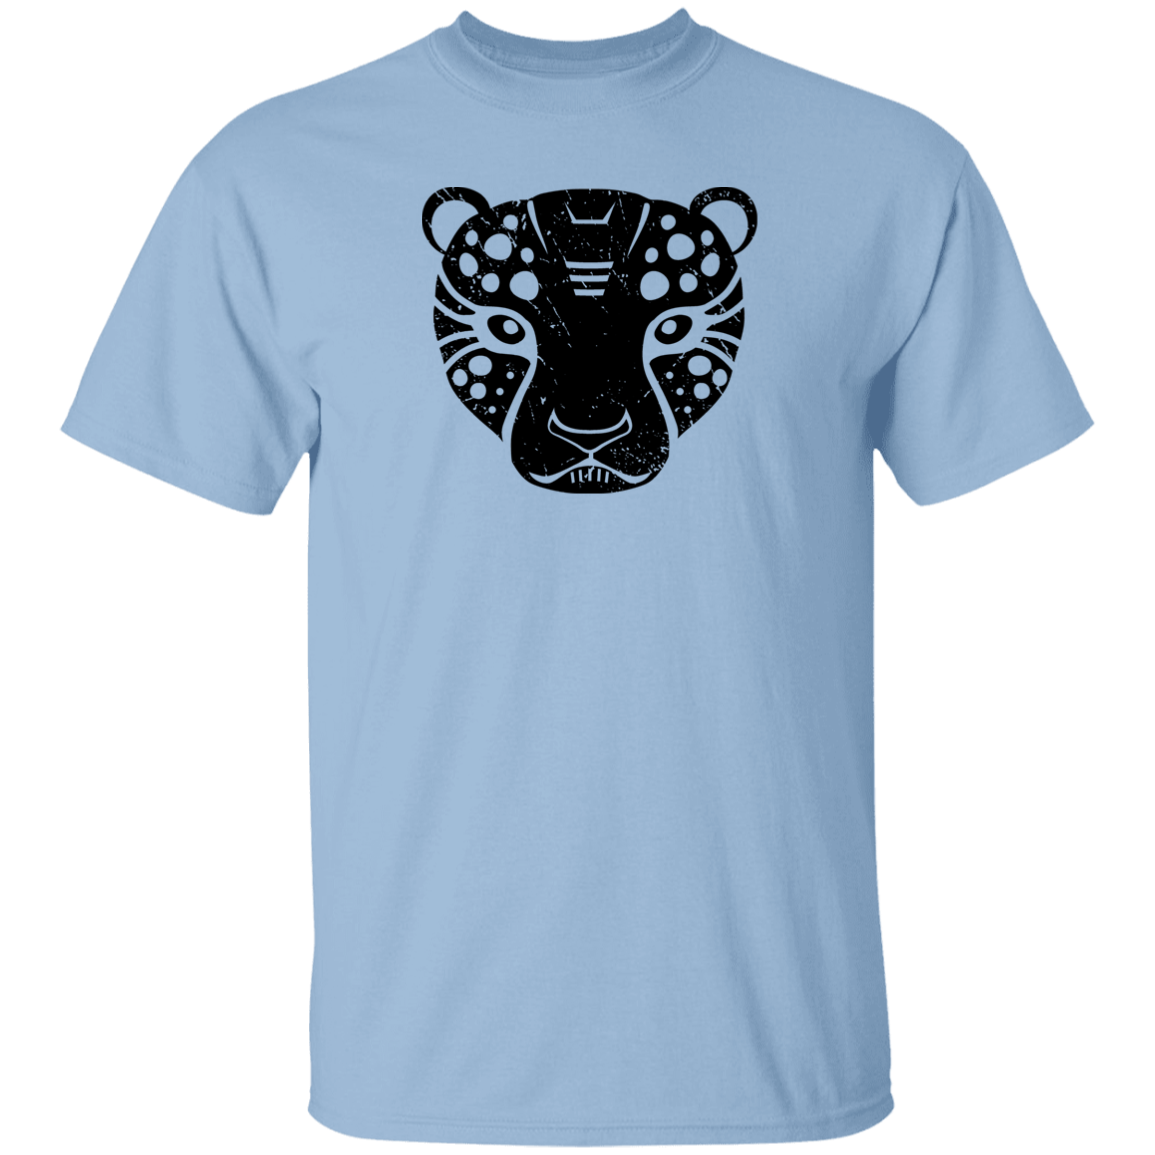 Black Distressed Emblem T-Shirt for Kids (Cheetah/Poise)